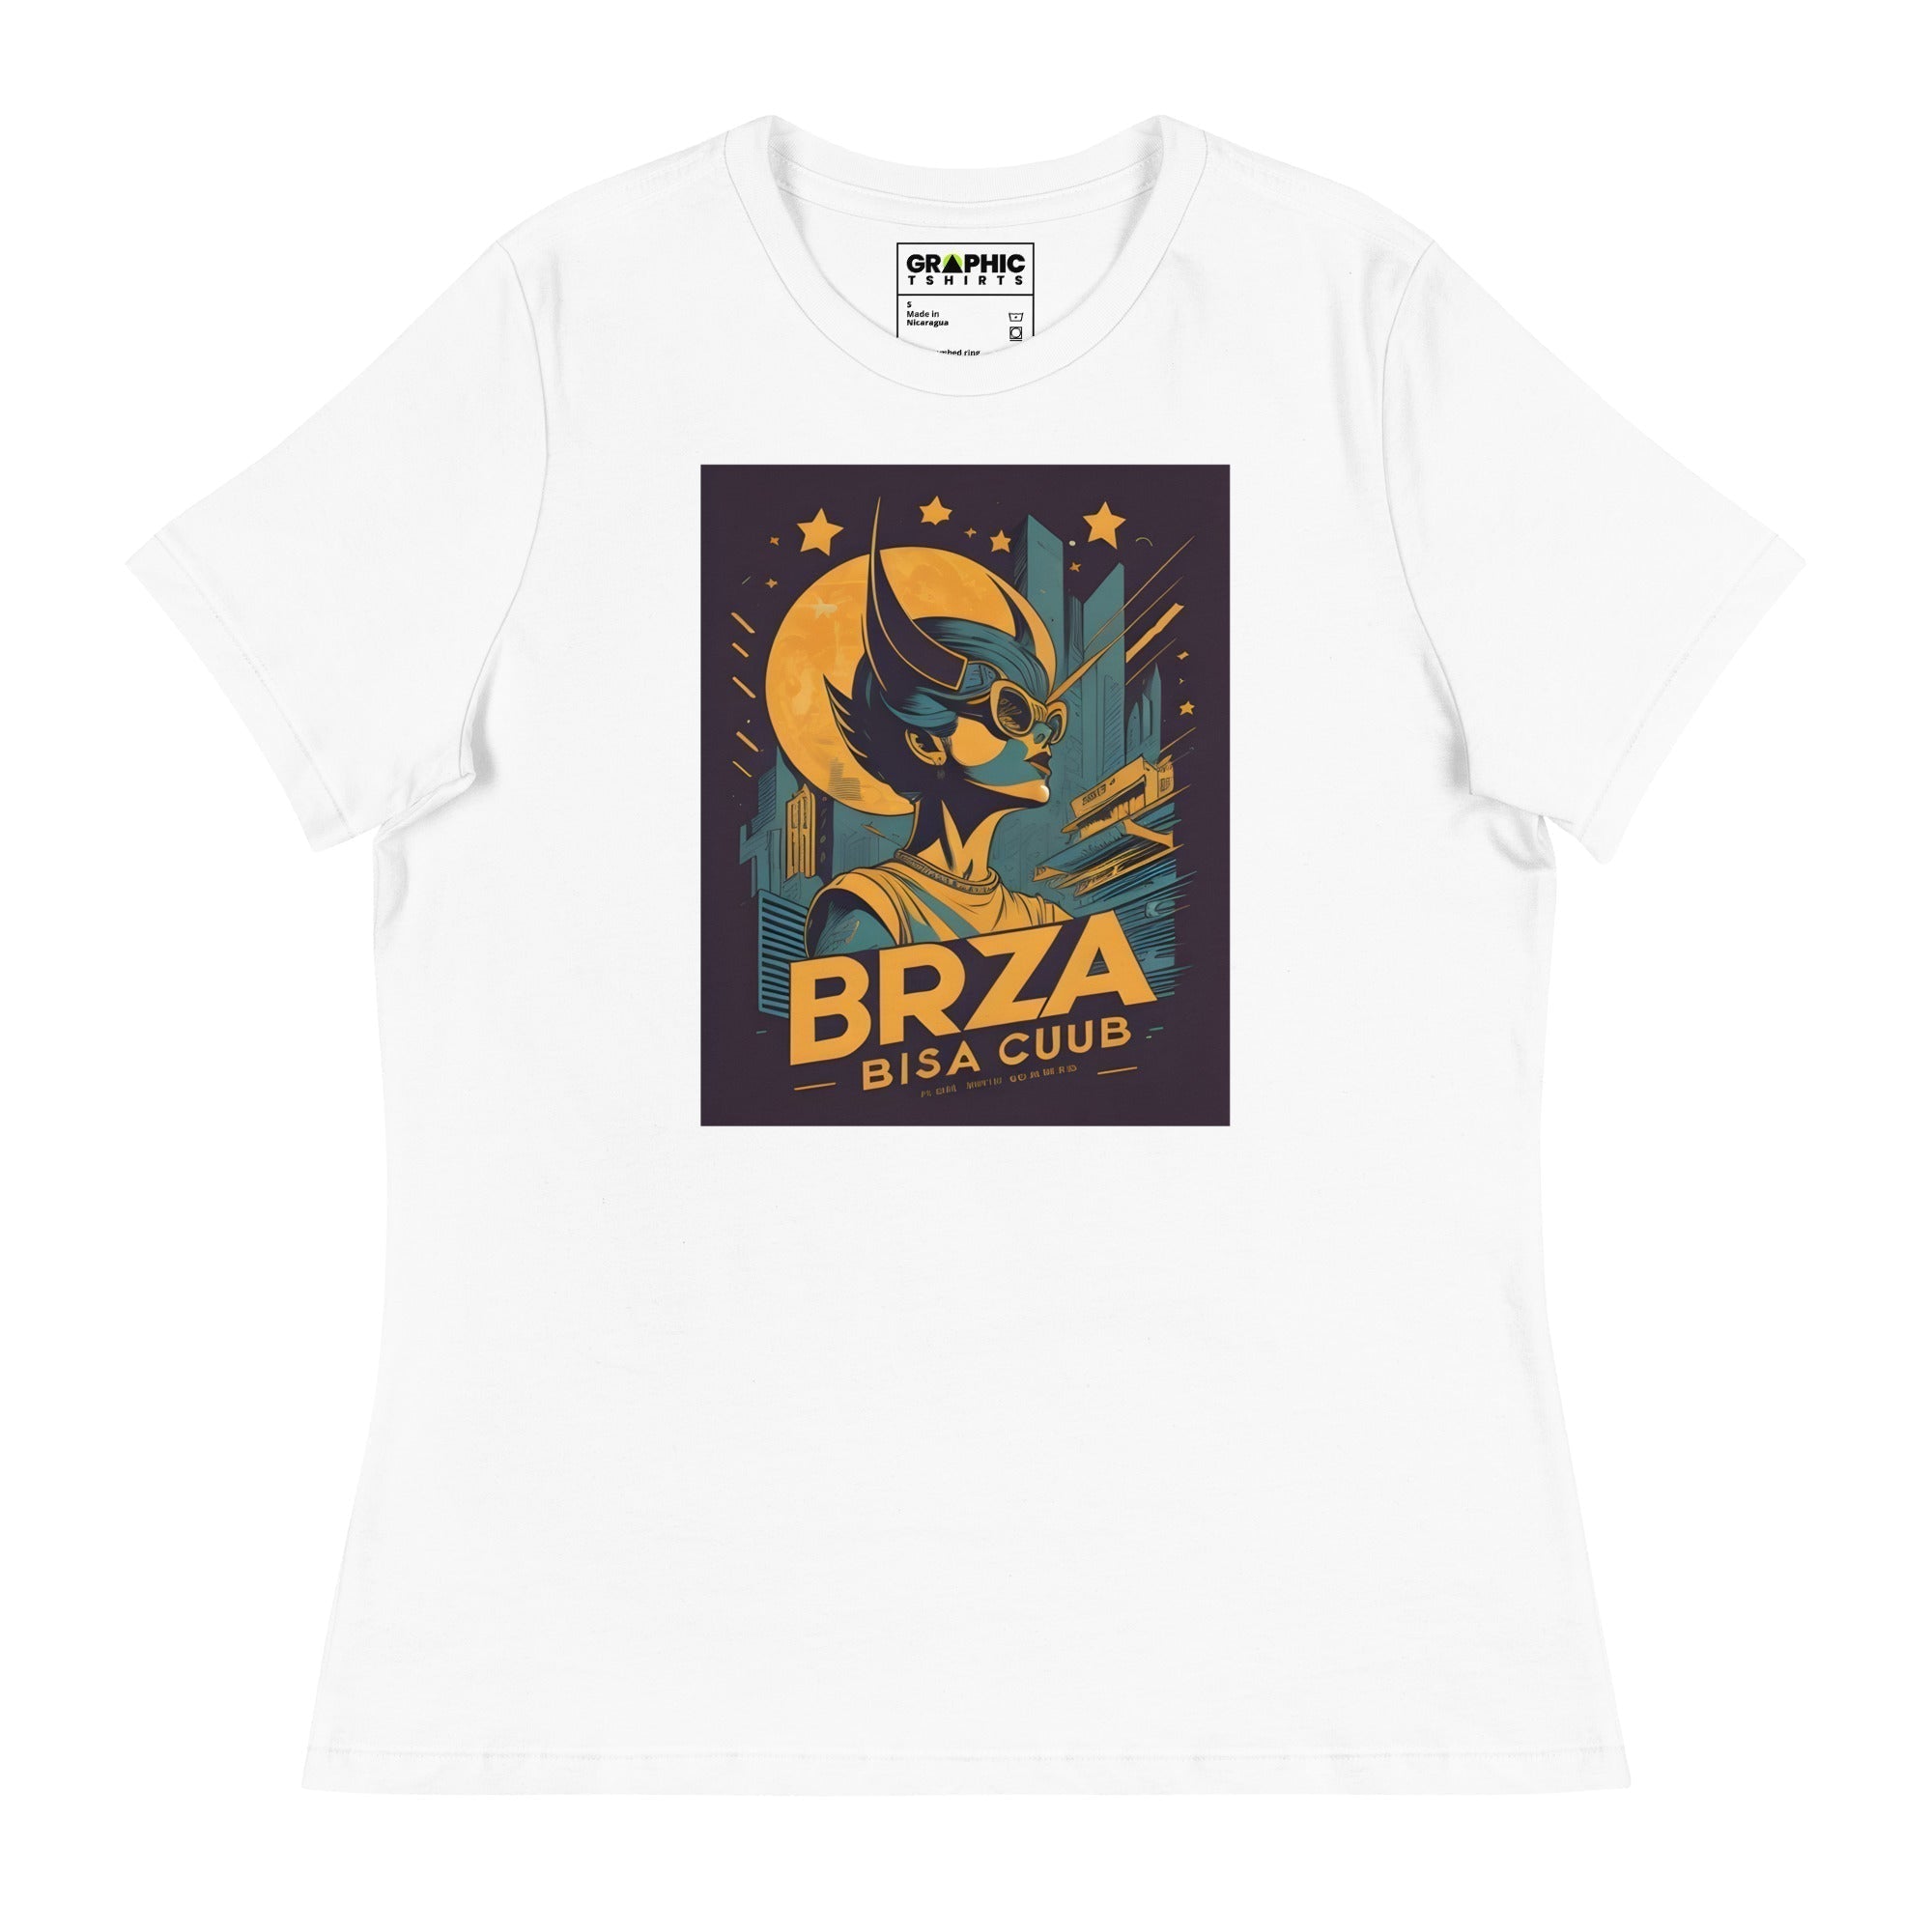 Women's Relaxed T-Shirt - Ibiza Night Club Heroes Comic Series v.16 - GRAPHIC T-SHIRTS